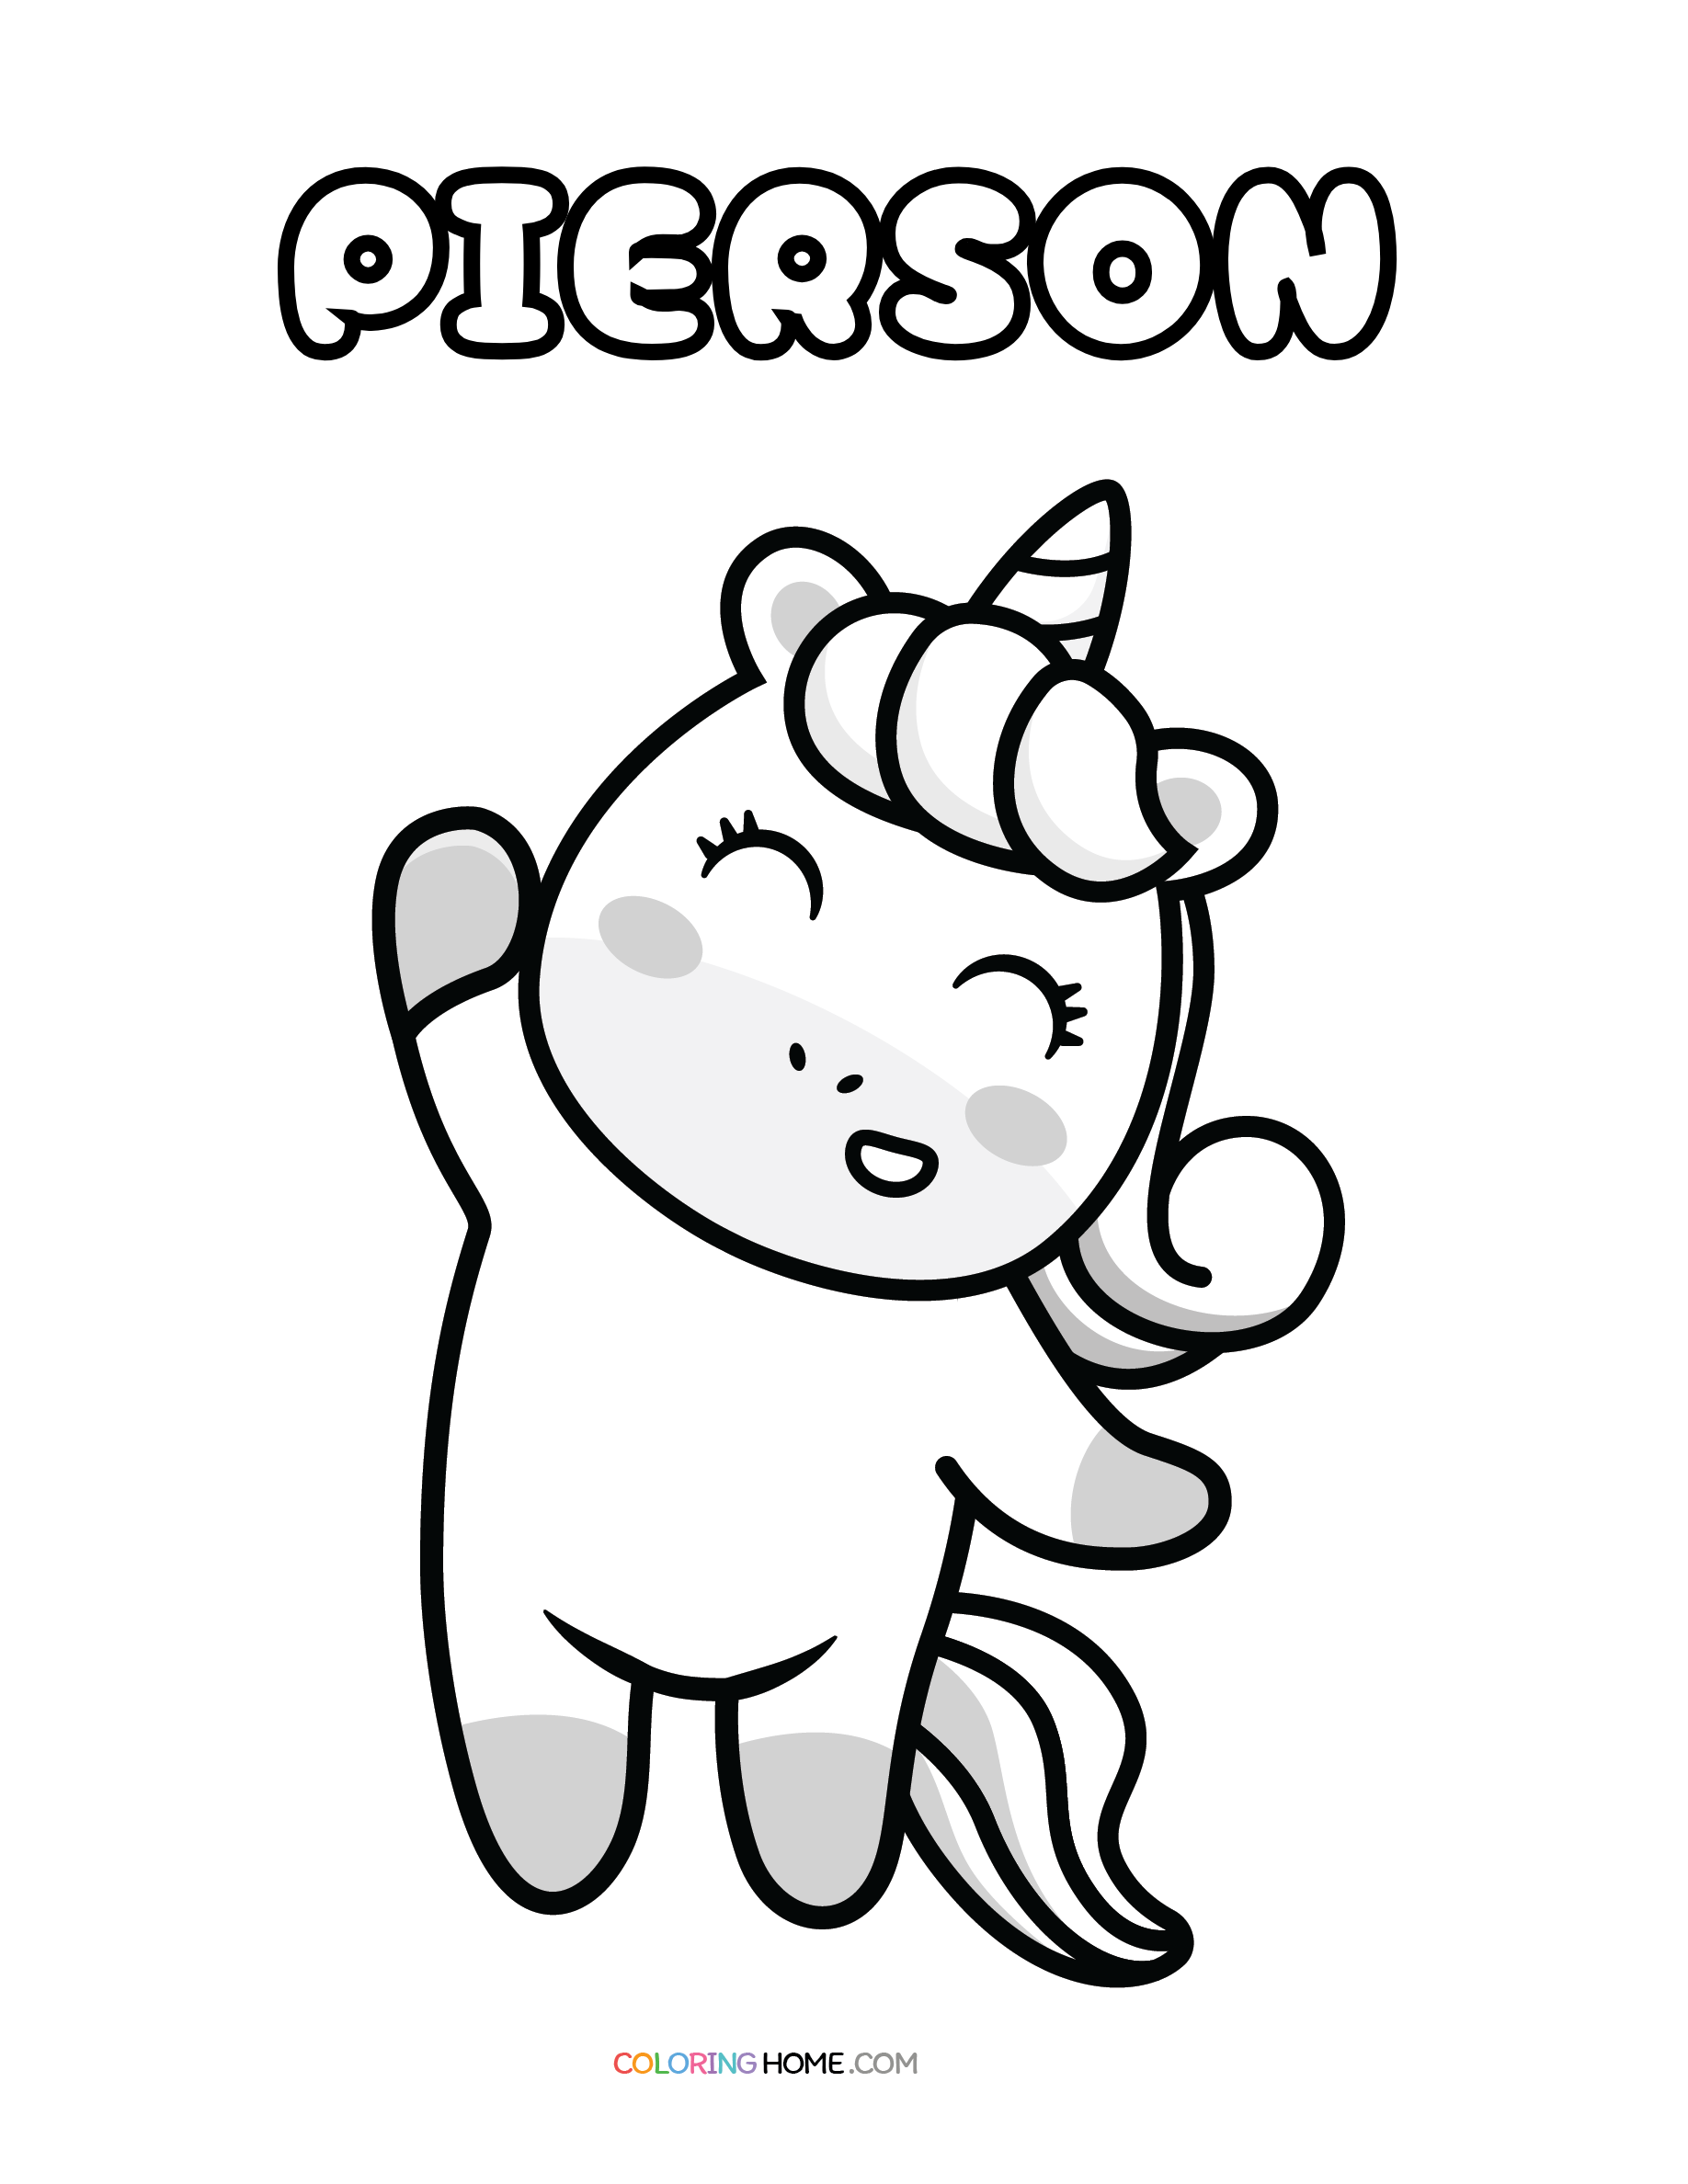 Pierson unicorn coloring page